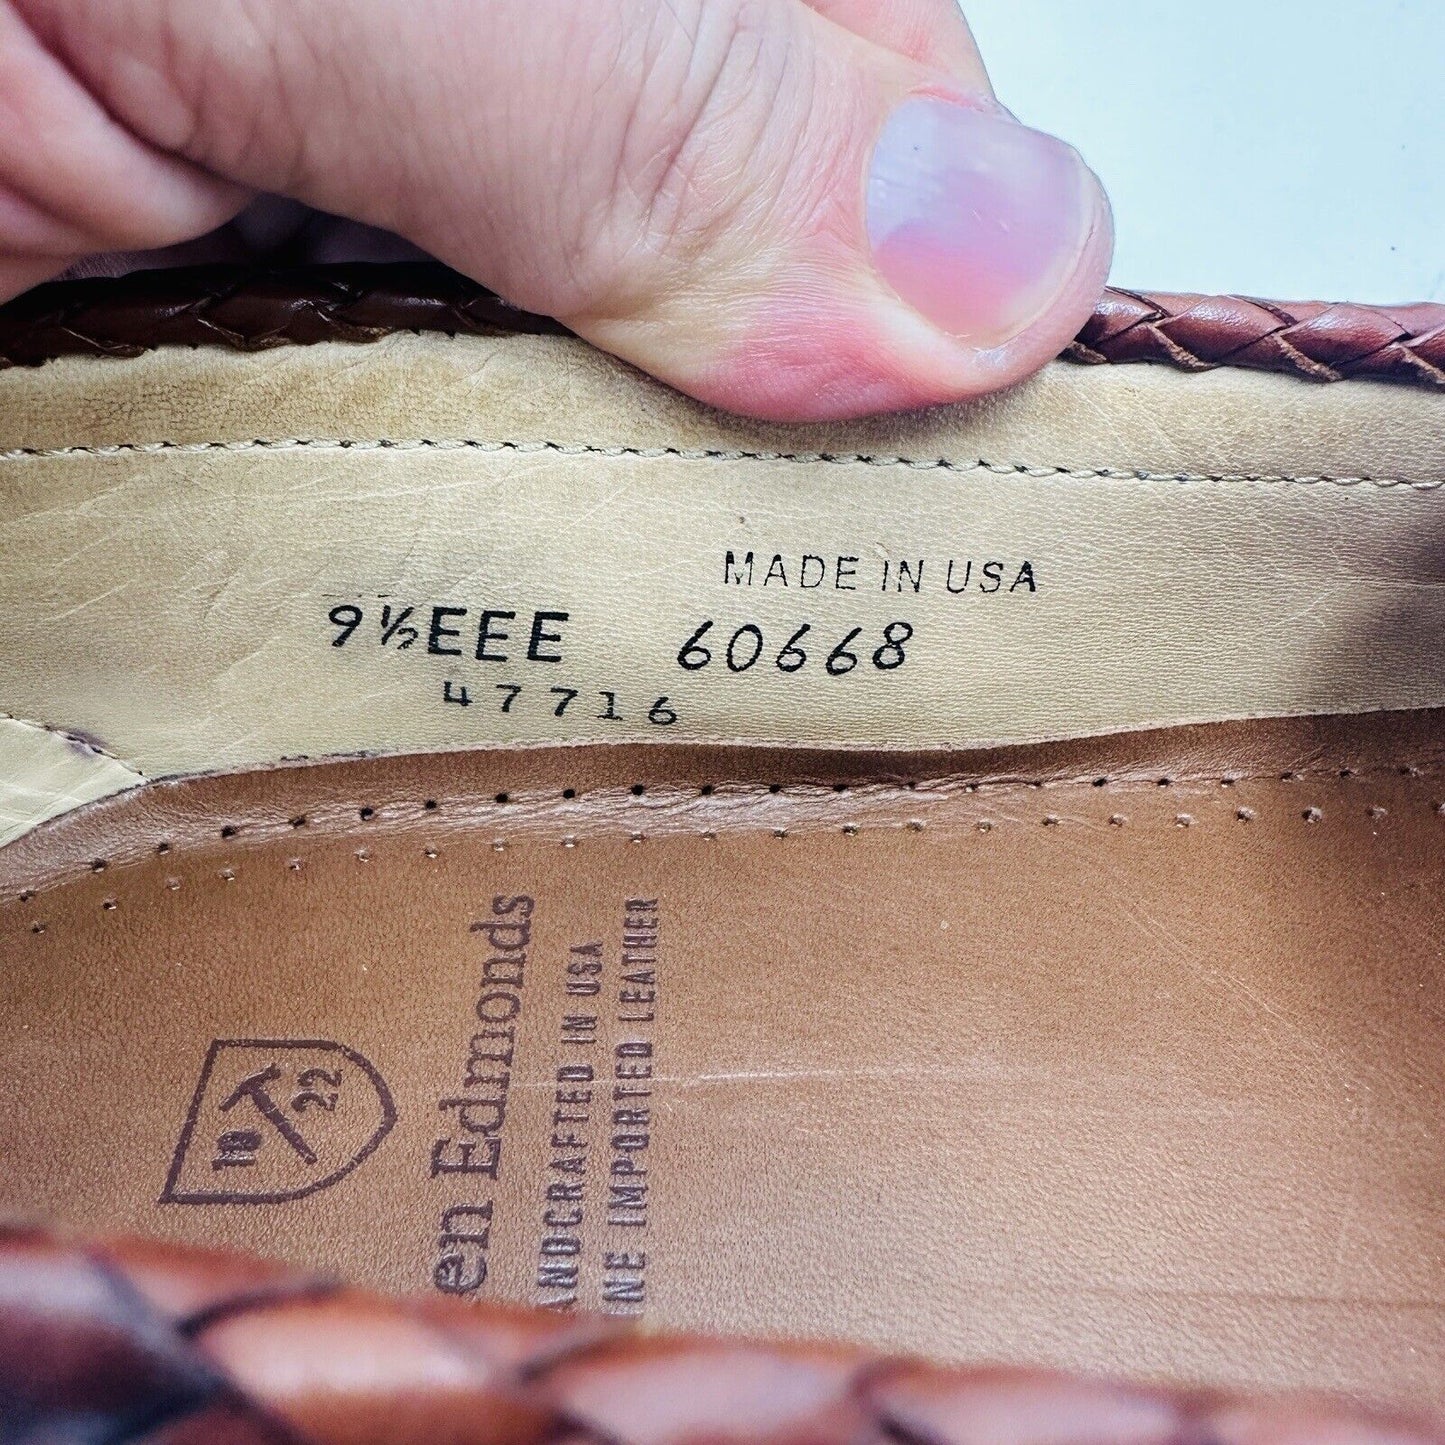 Allen Edmonds Men's Shoes Size 9 1/2 Maxfield Tassel Loafers E Mahogany Leather